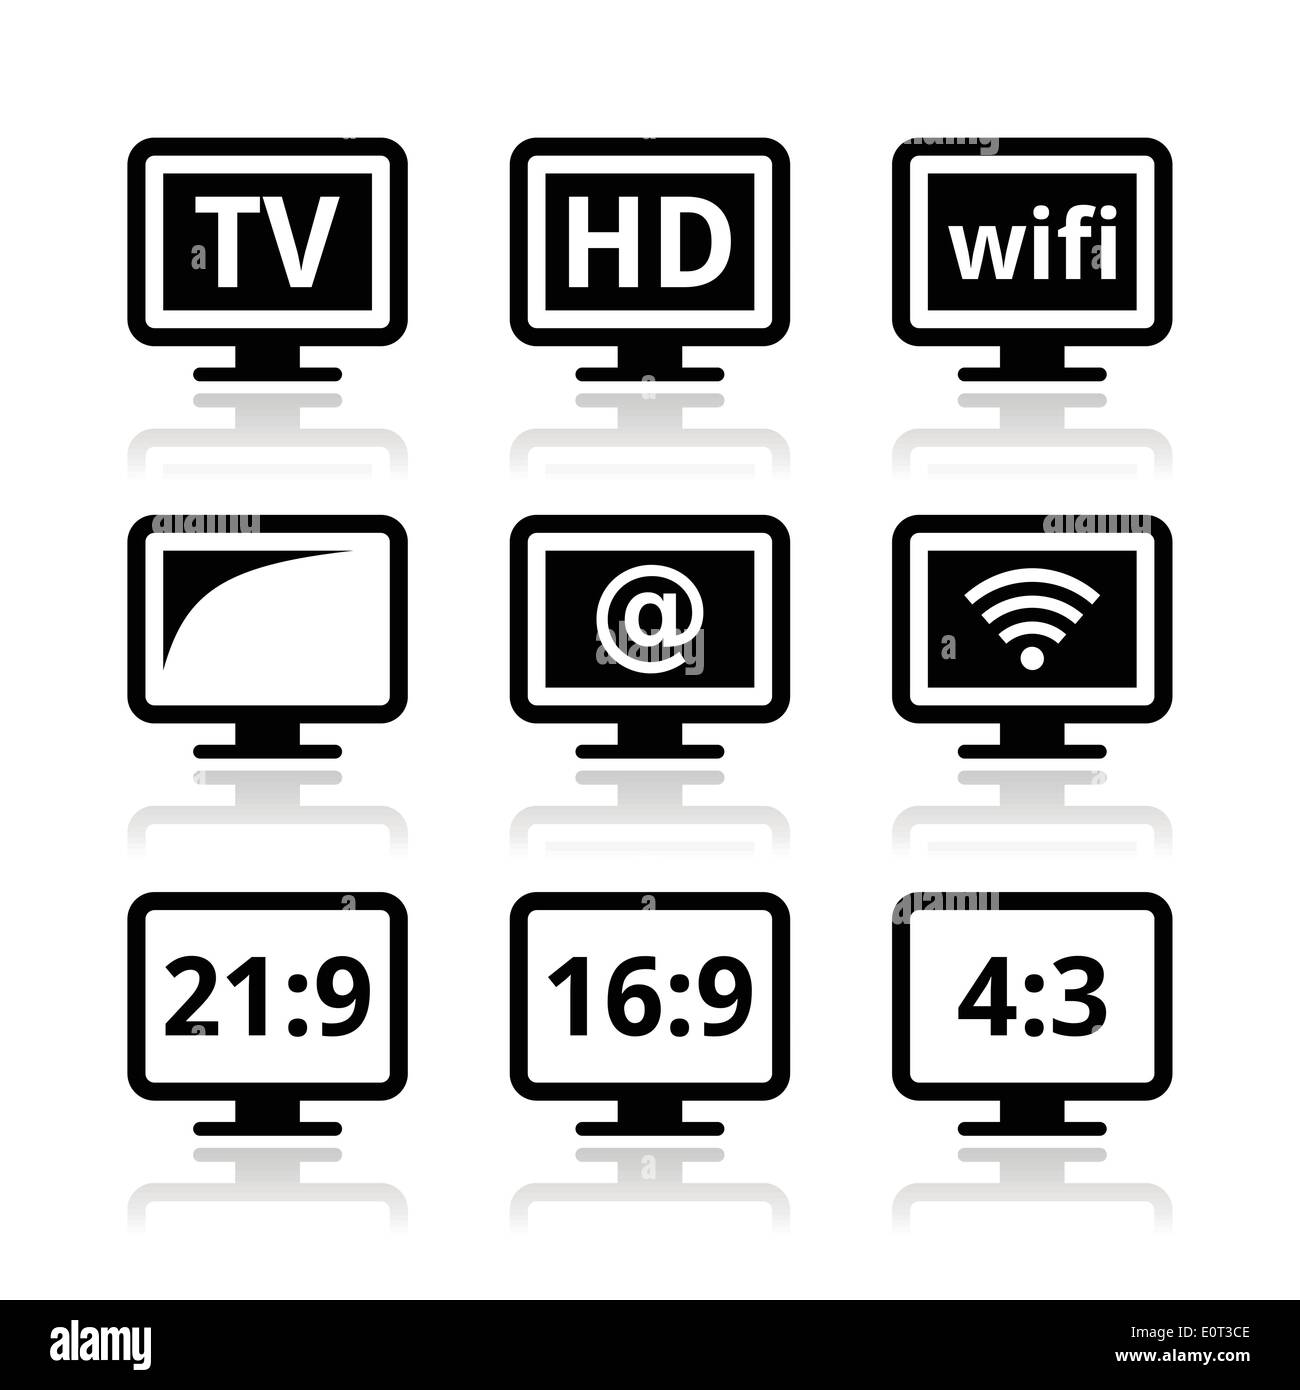 TV set, 3d, HD vector icons Stock Vector